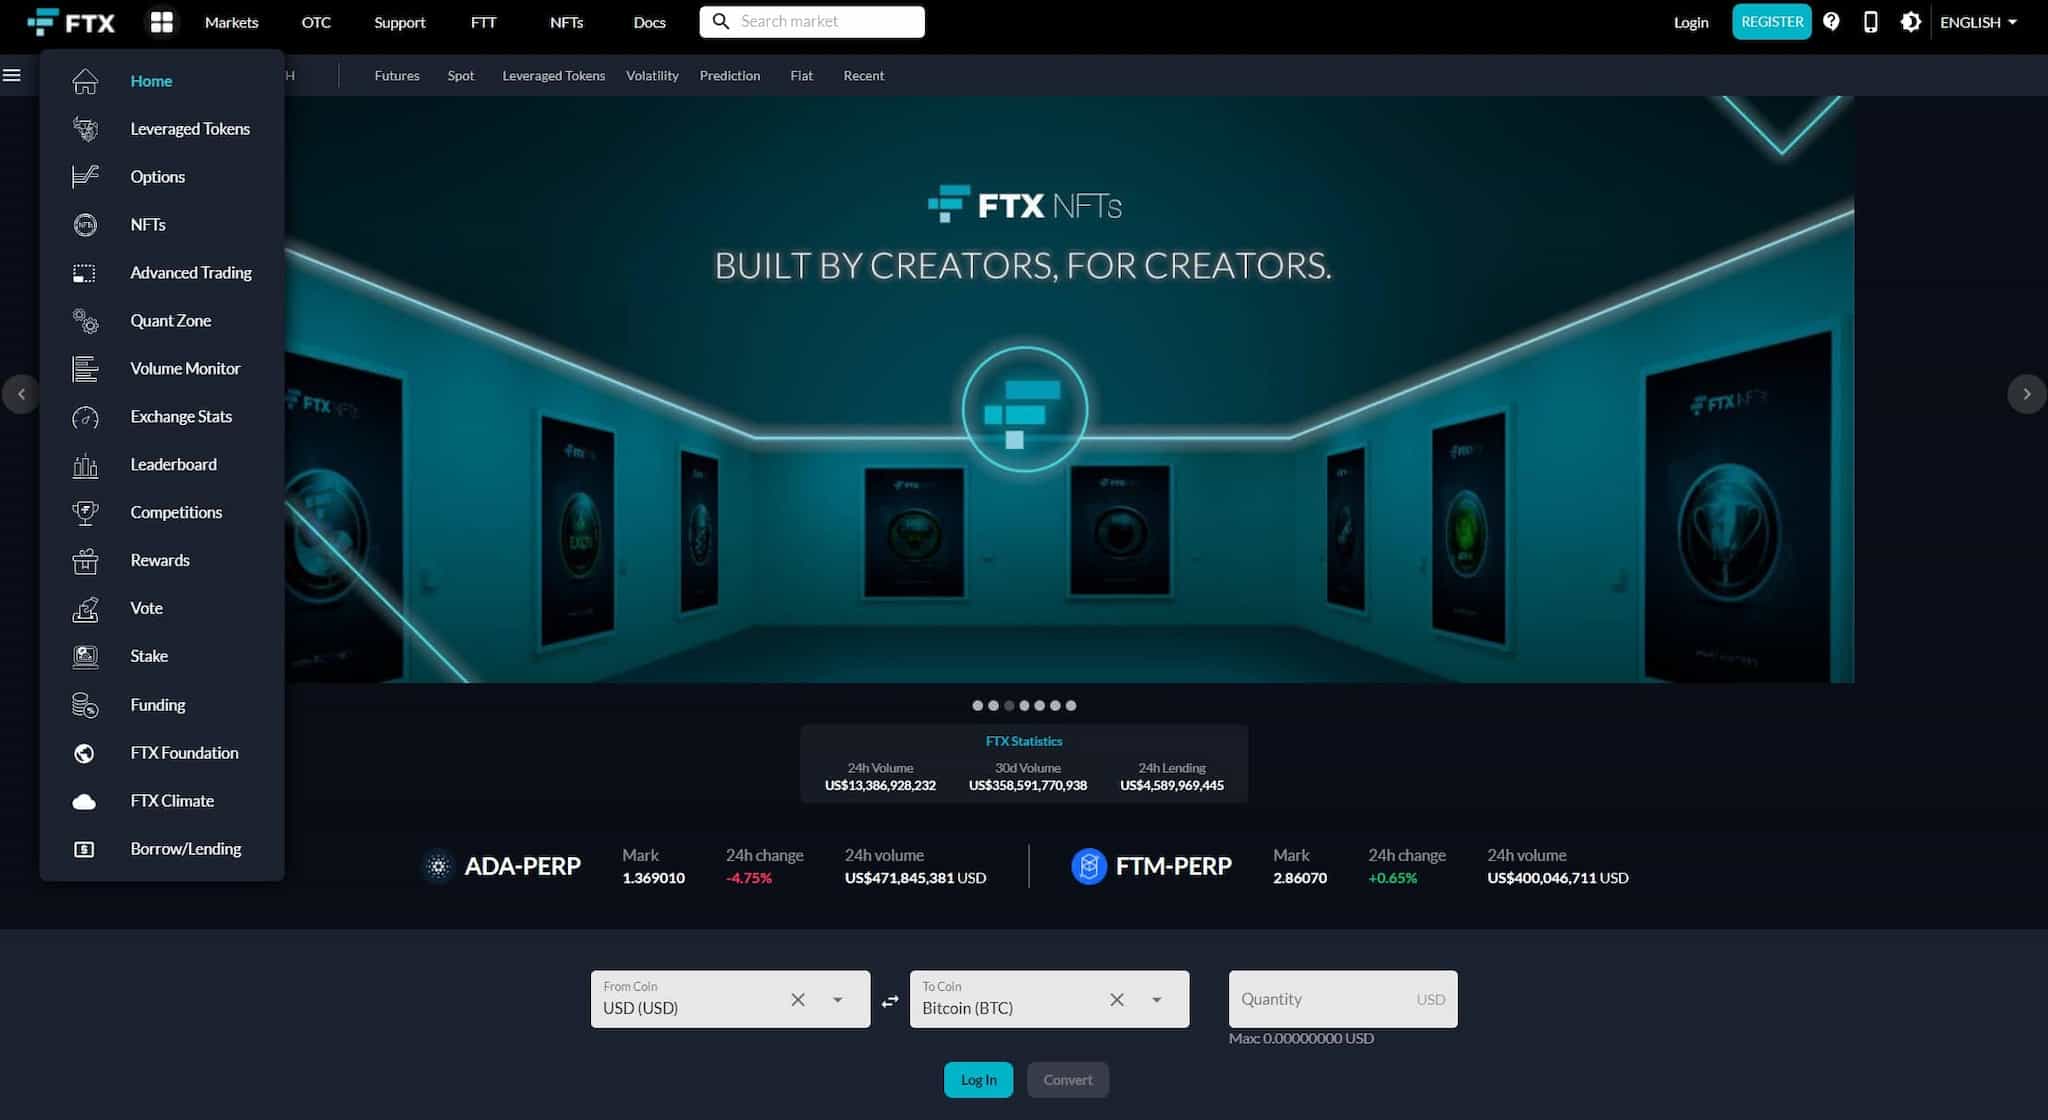 FTX Homepage